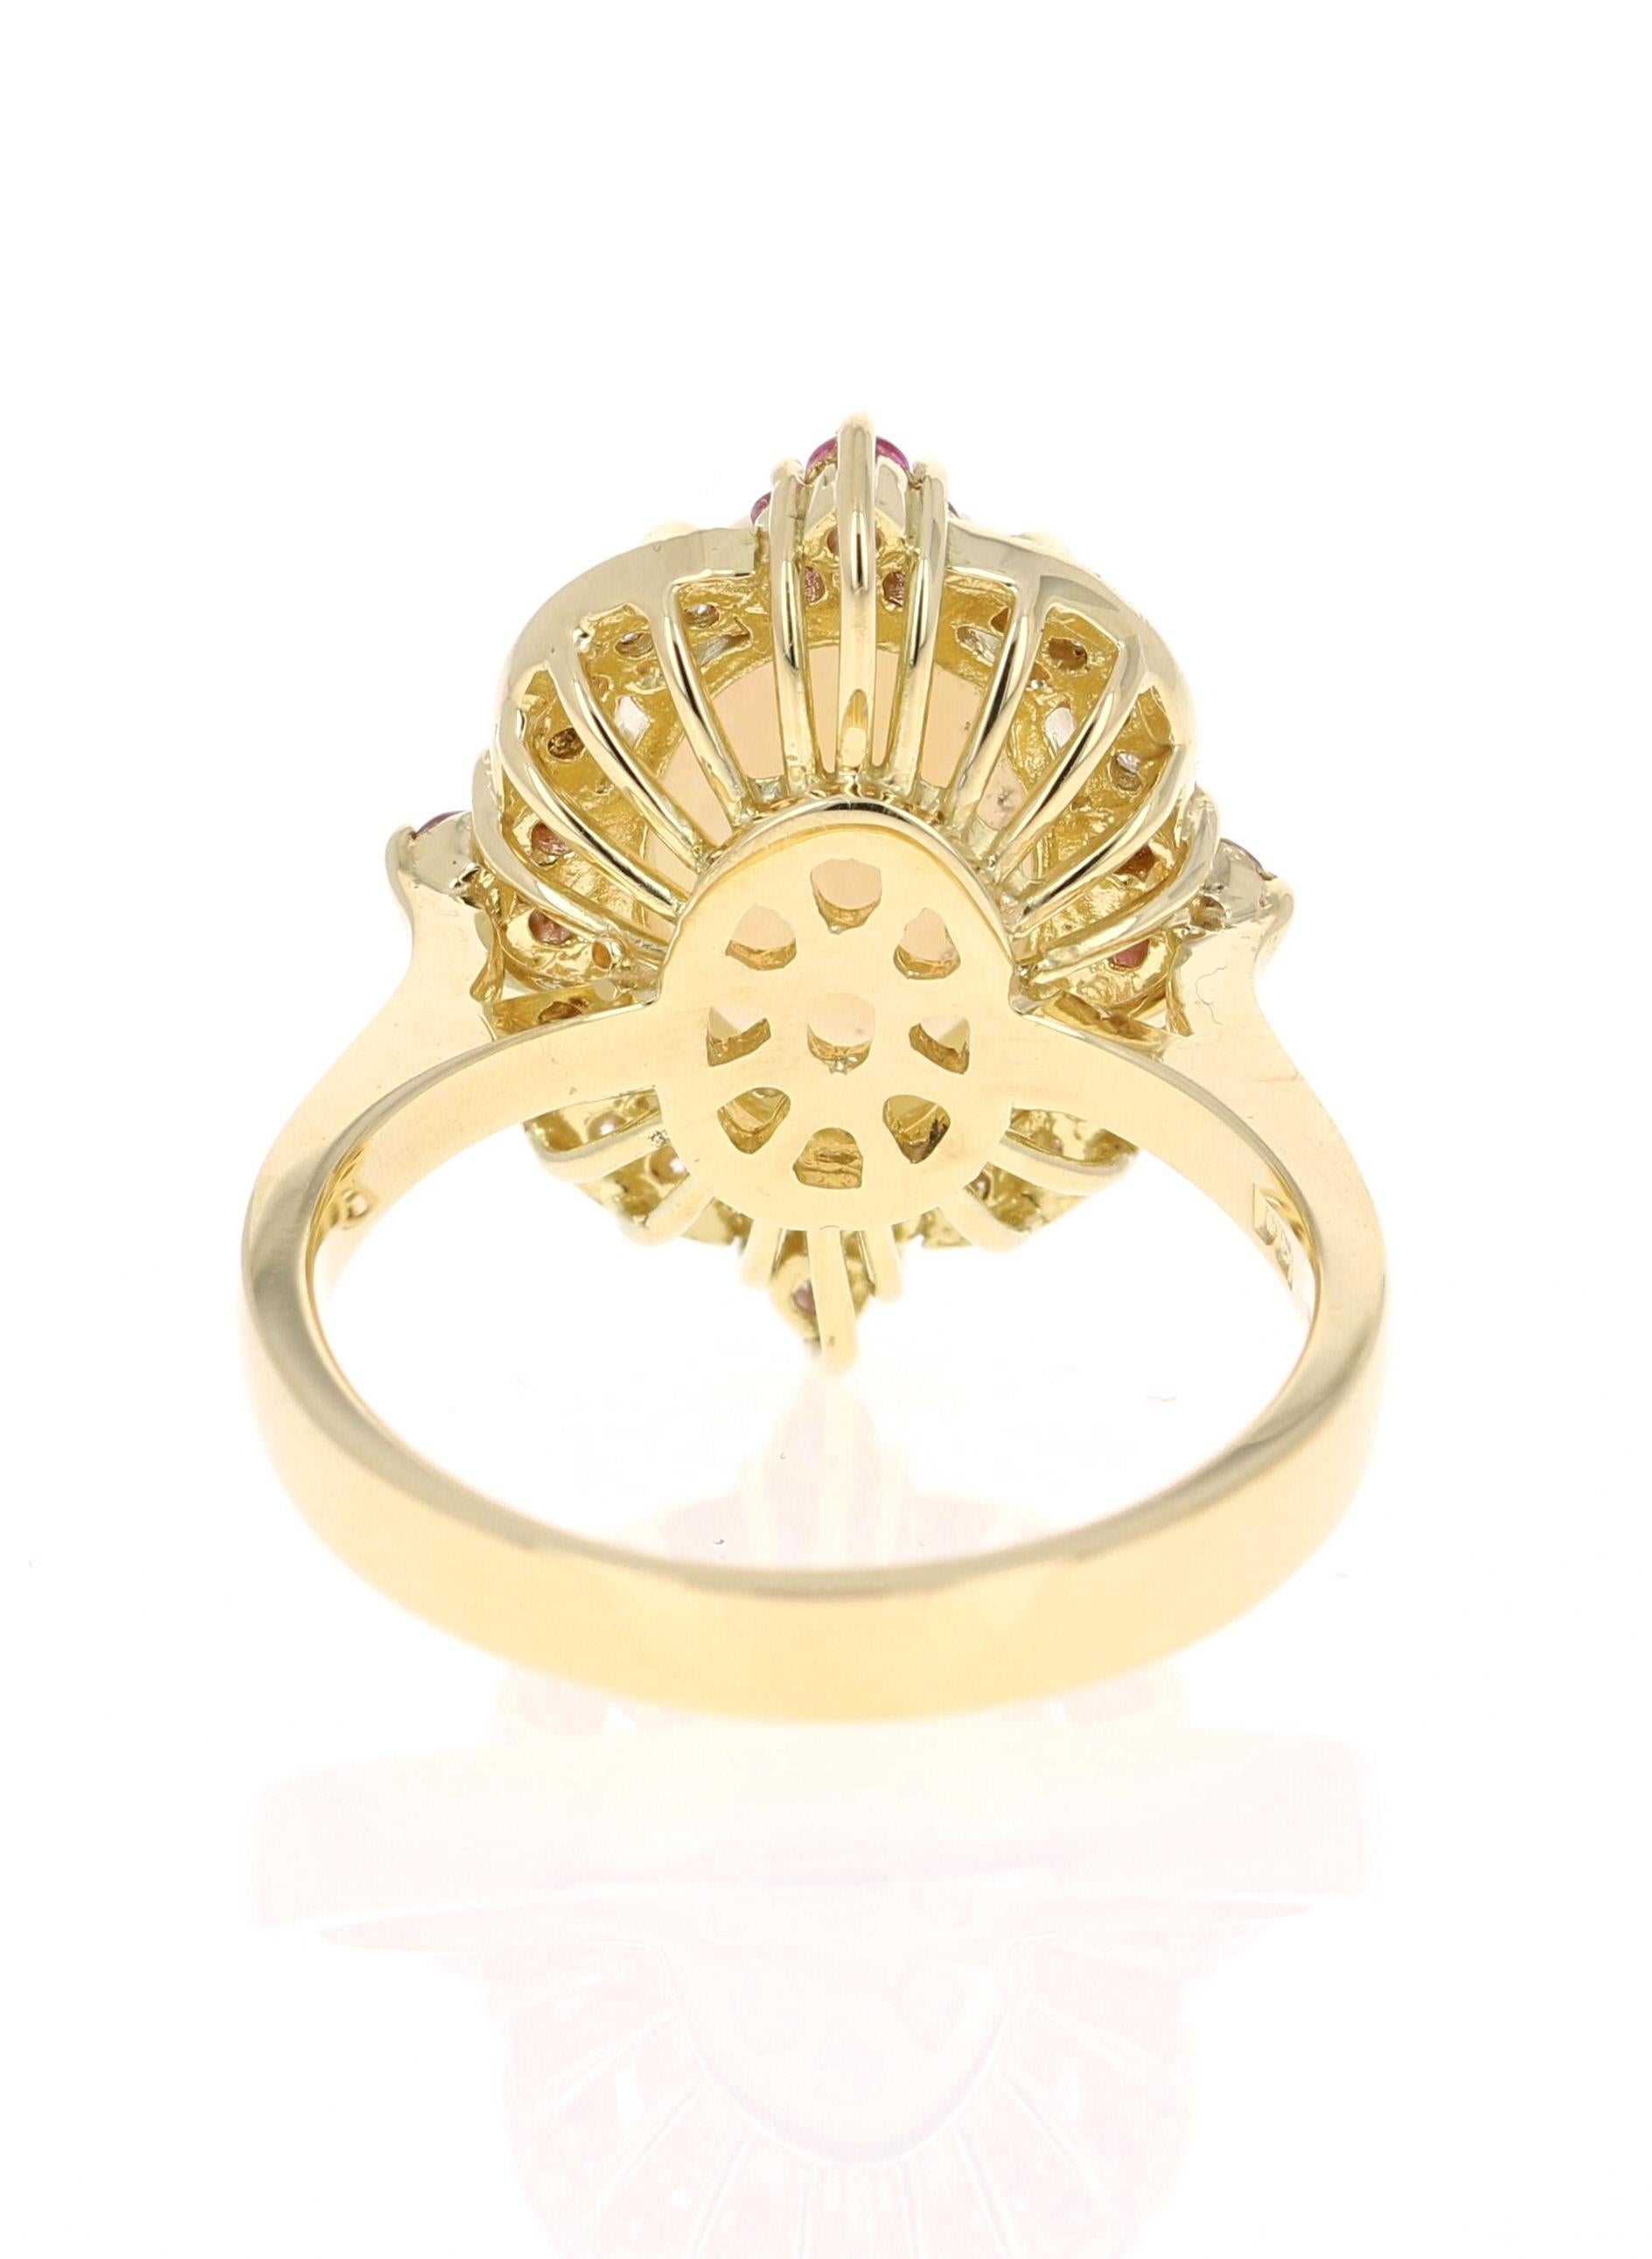 Oval Cut 2.91 Carat Opal Diamond 18 Karat Yellow Gold Ring For Sale